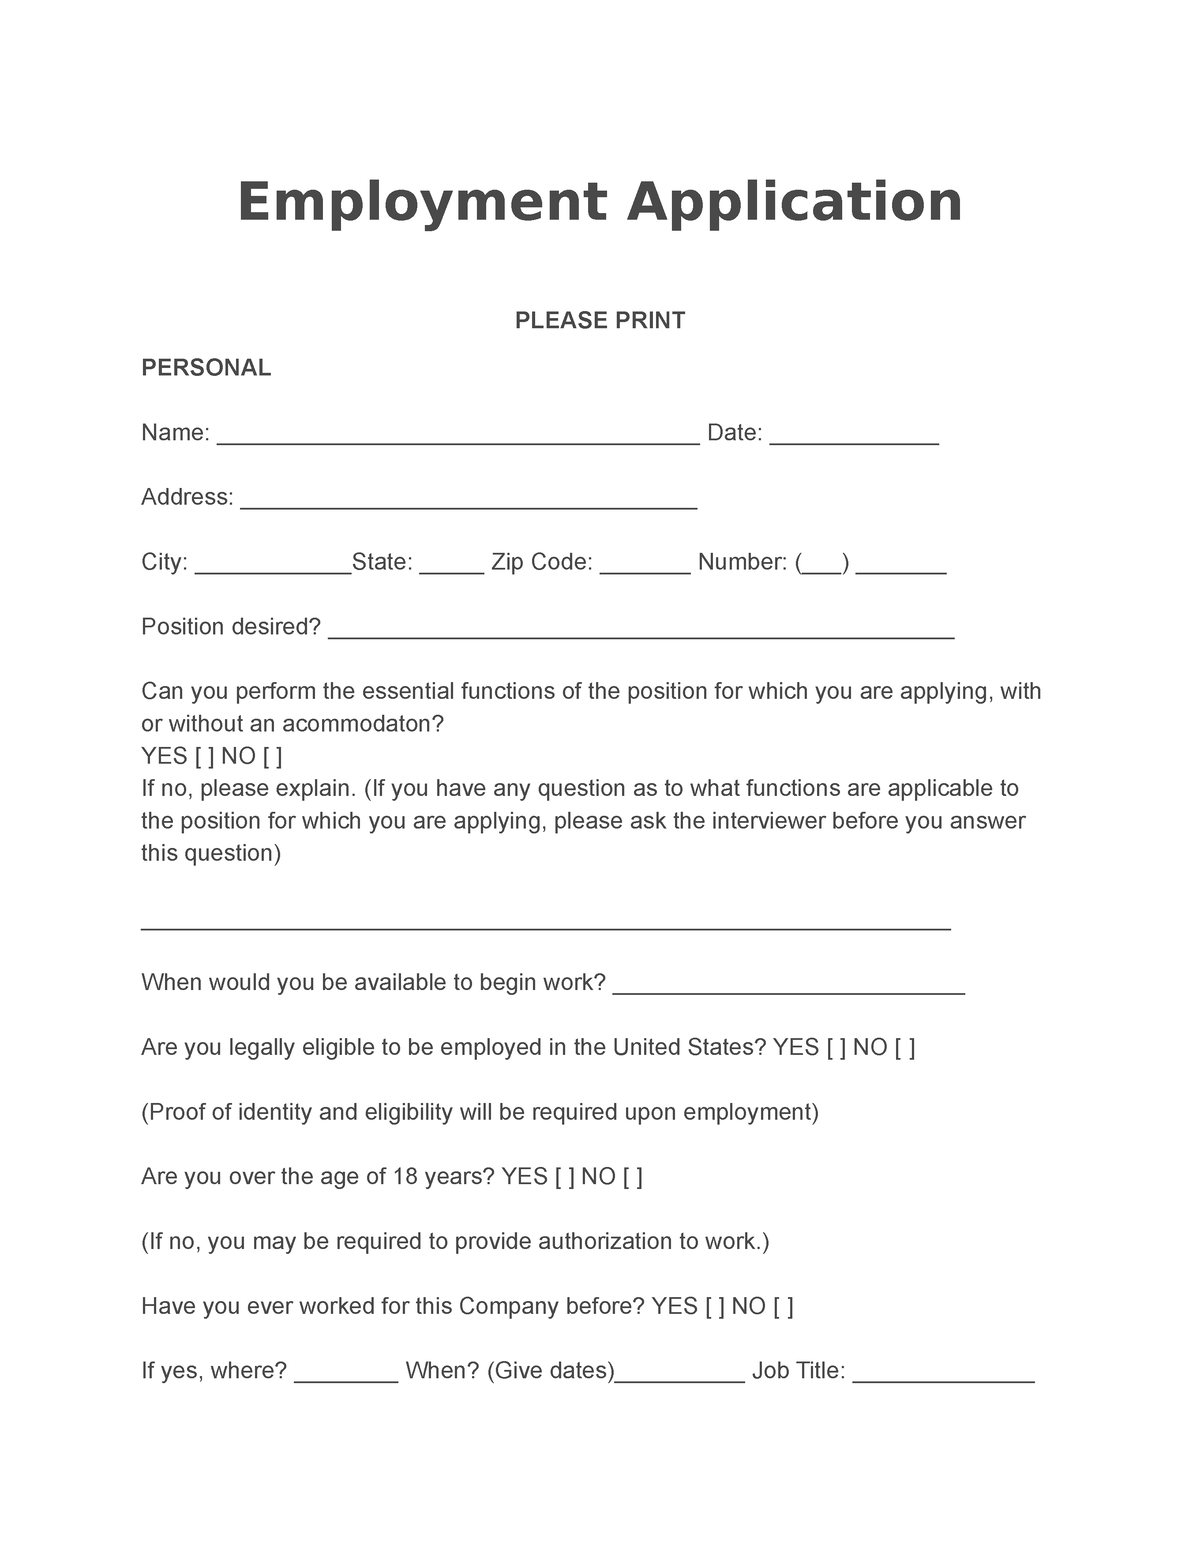 6.3 - Employment Application Form - Employment Application PLEASE PRINT ...